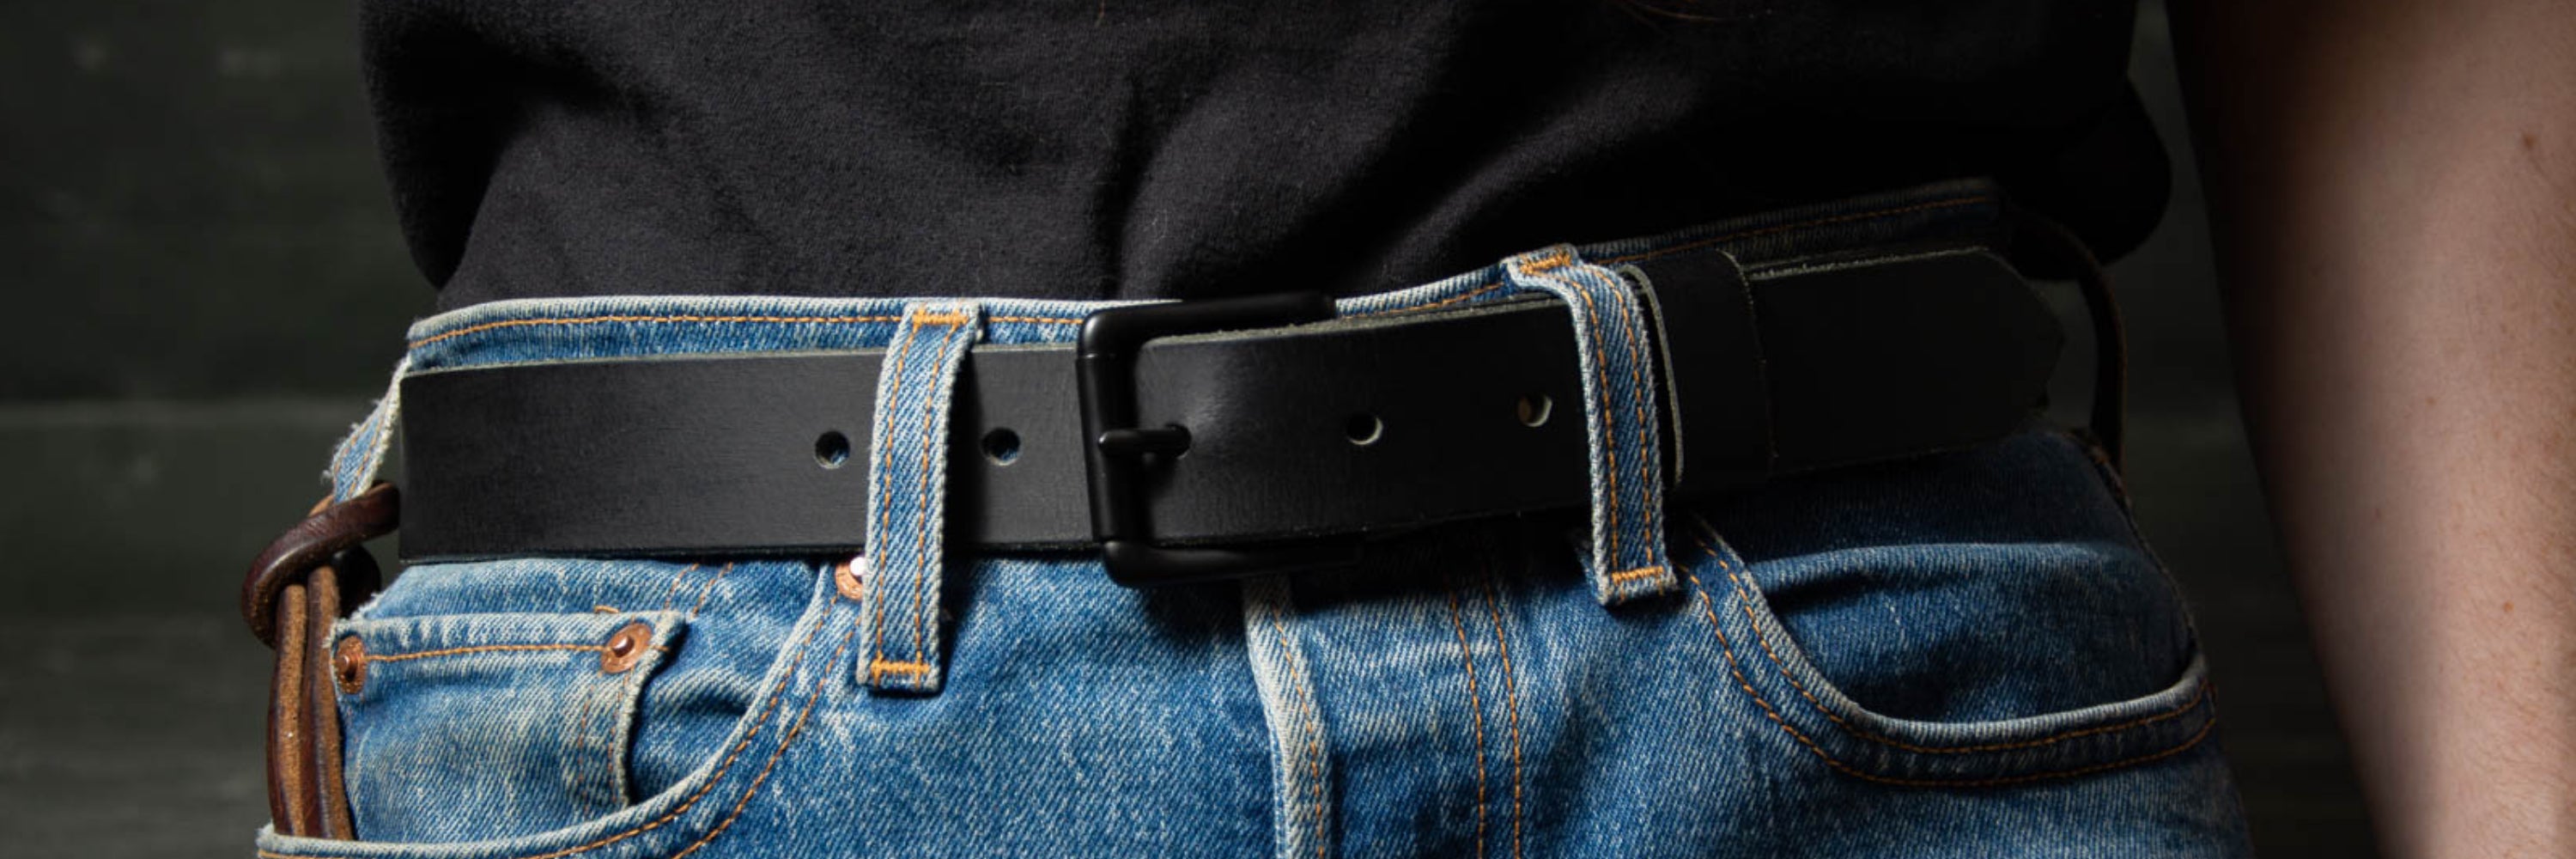 Full-Grain Leather Belts - Phee's Original Goods - Handmade in Canada